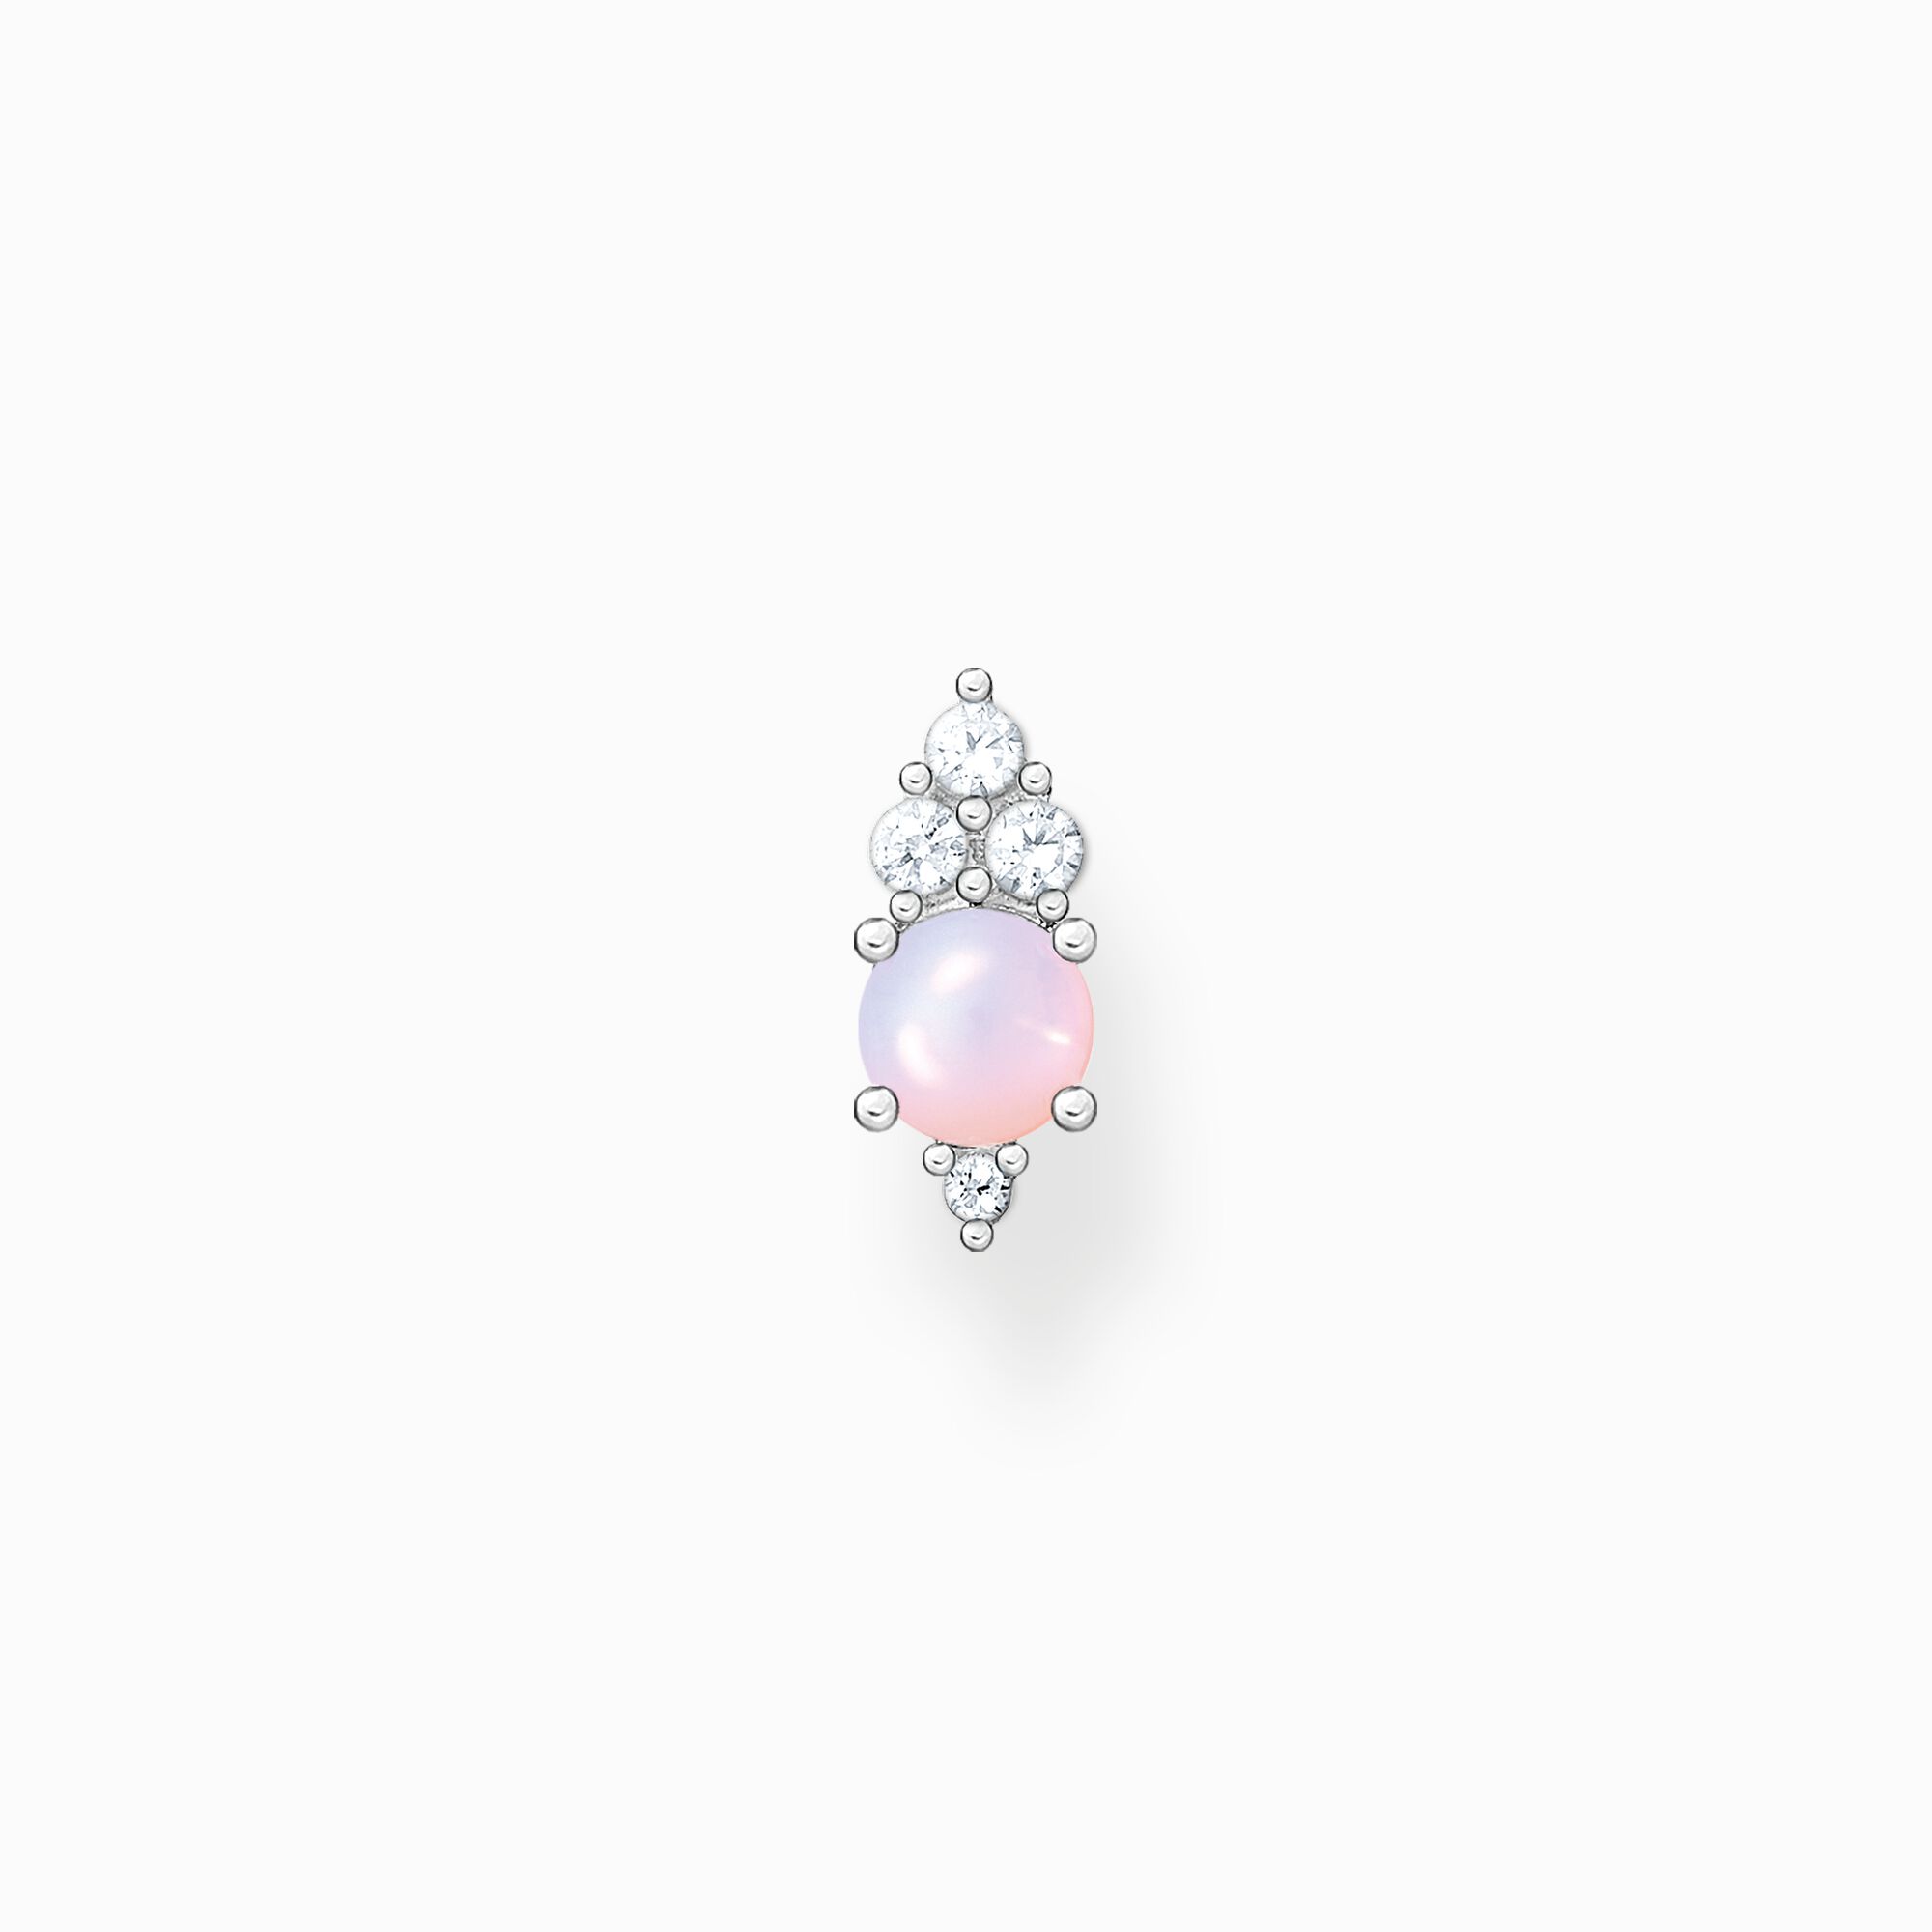 Neu eingetroffene Artikel Single ear stud with imitation rosé opal SABO THOMAS 